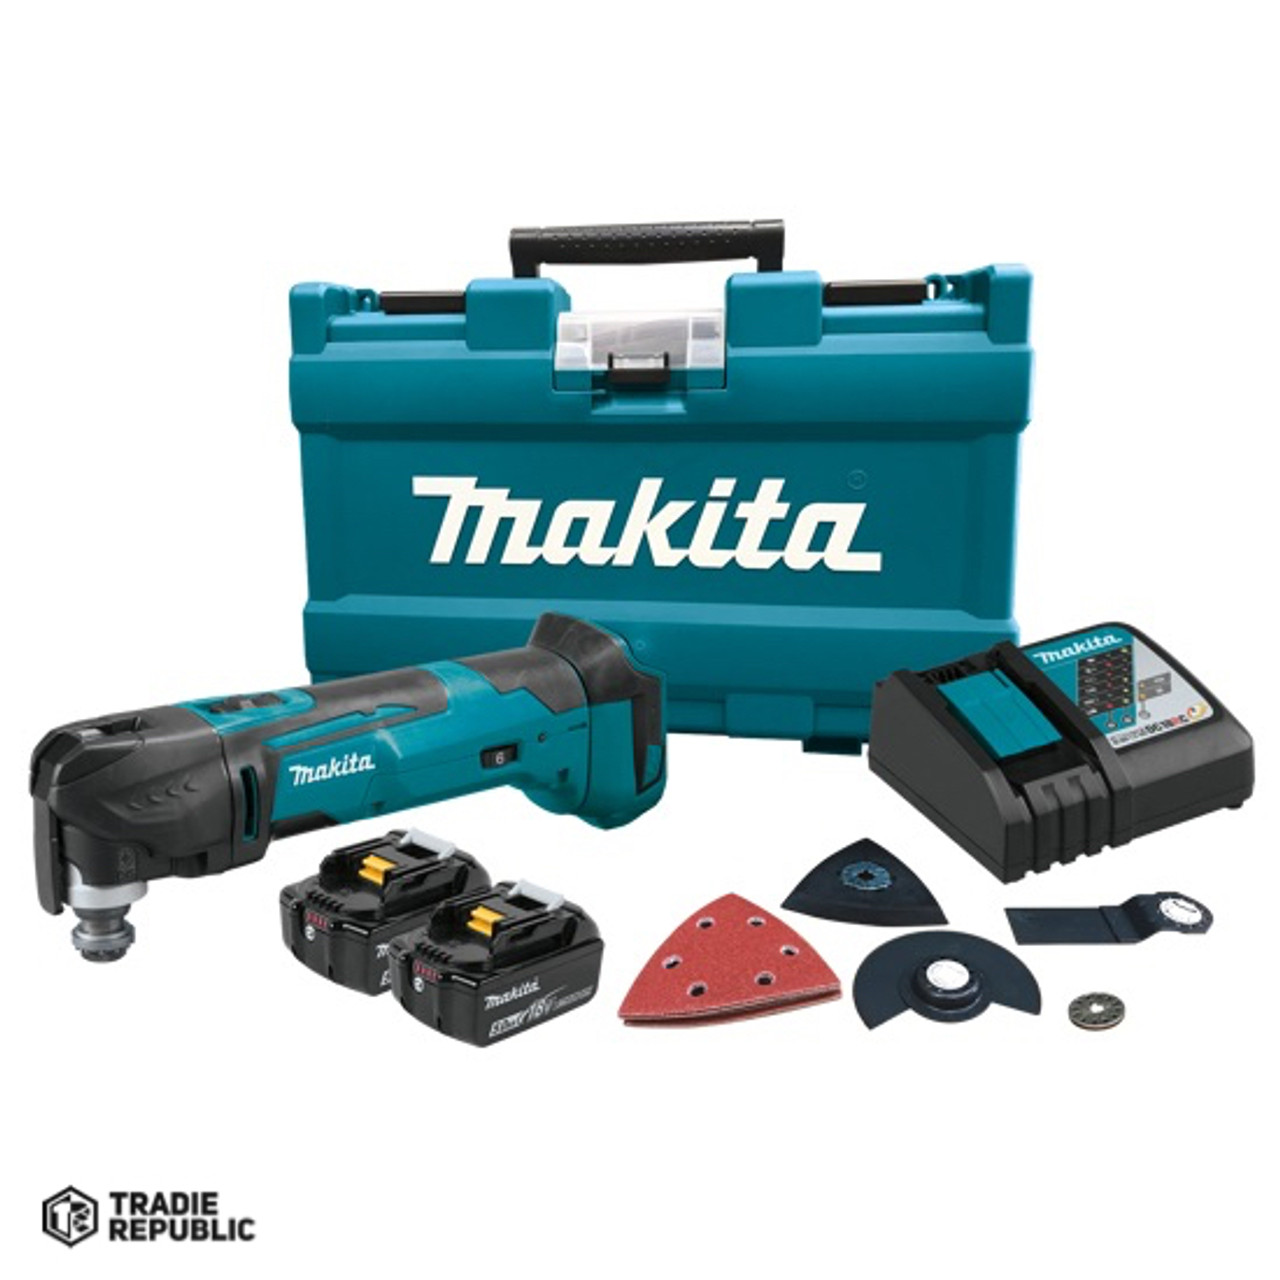 DTM51RTEX5 Makita 18V LXT Multi-Tool, Tool-Less blade change, Kit (5.0Ah) w/Acc kits